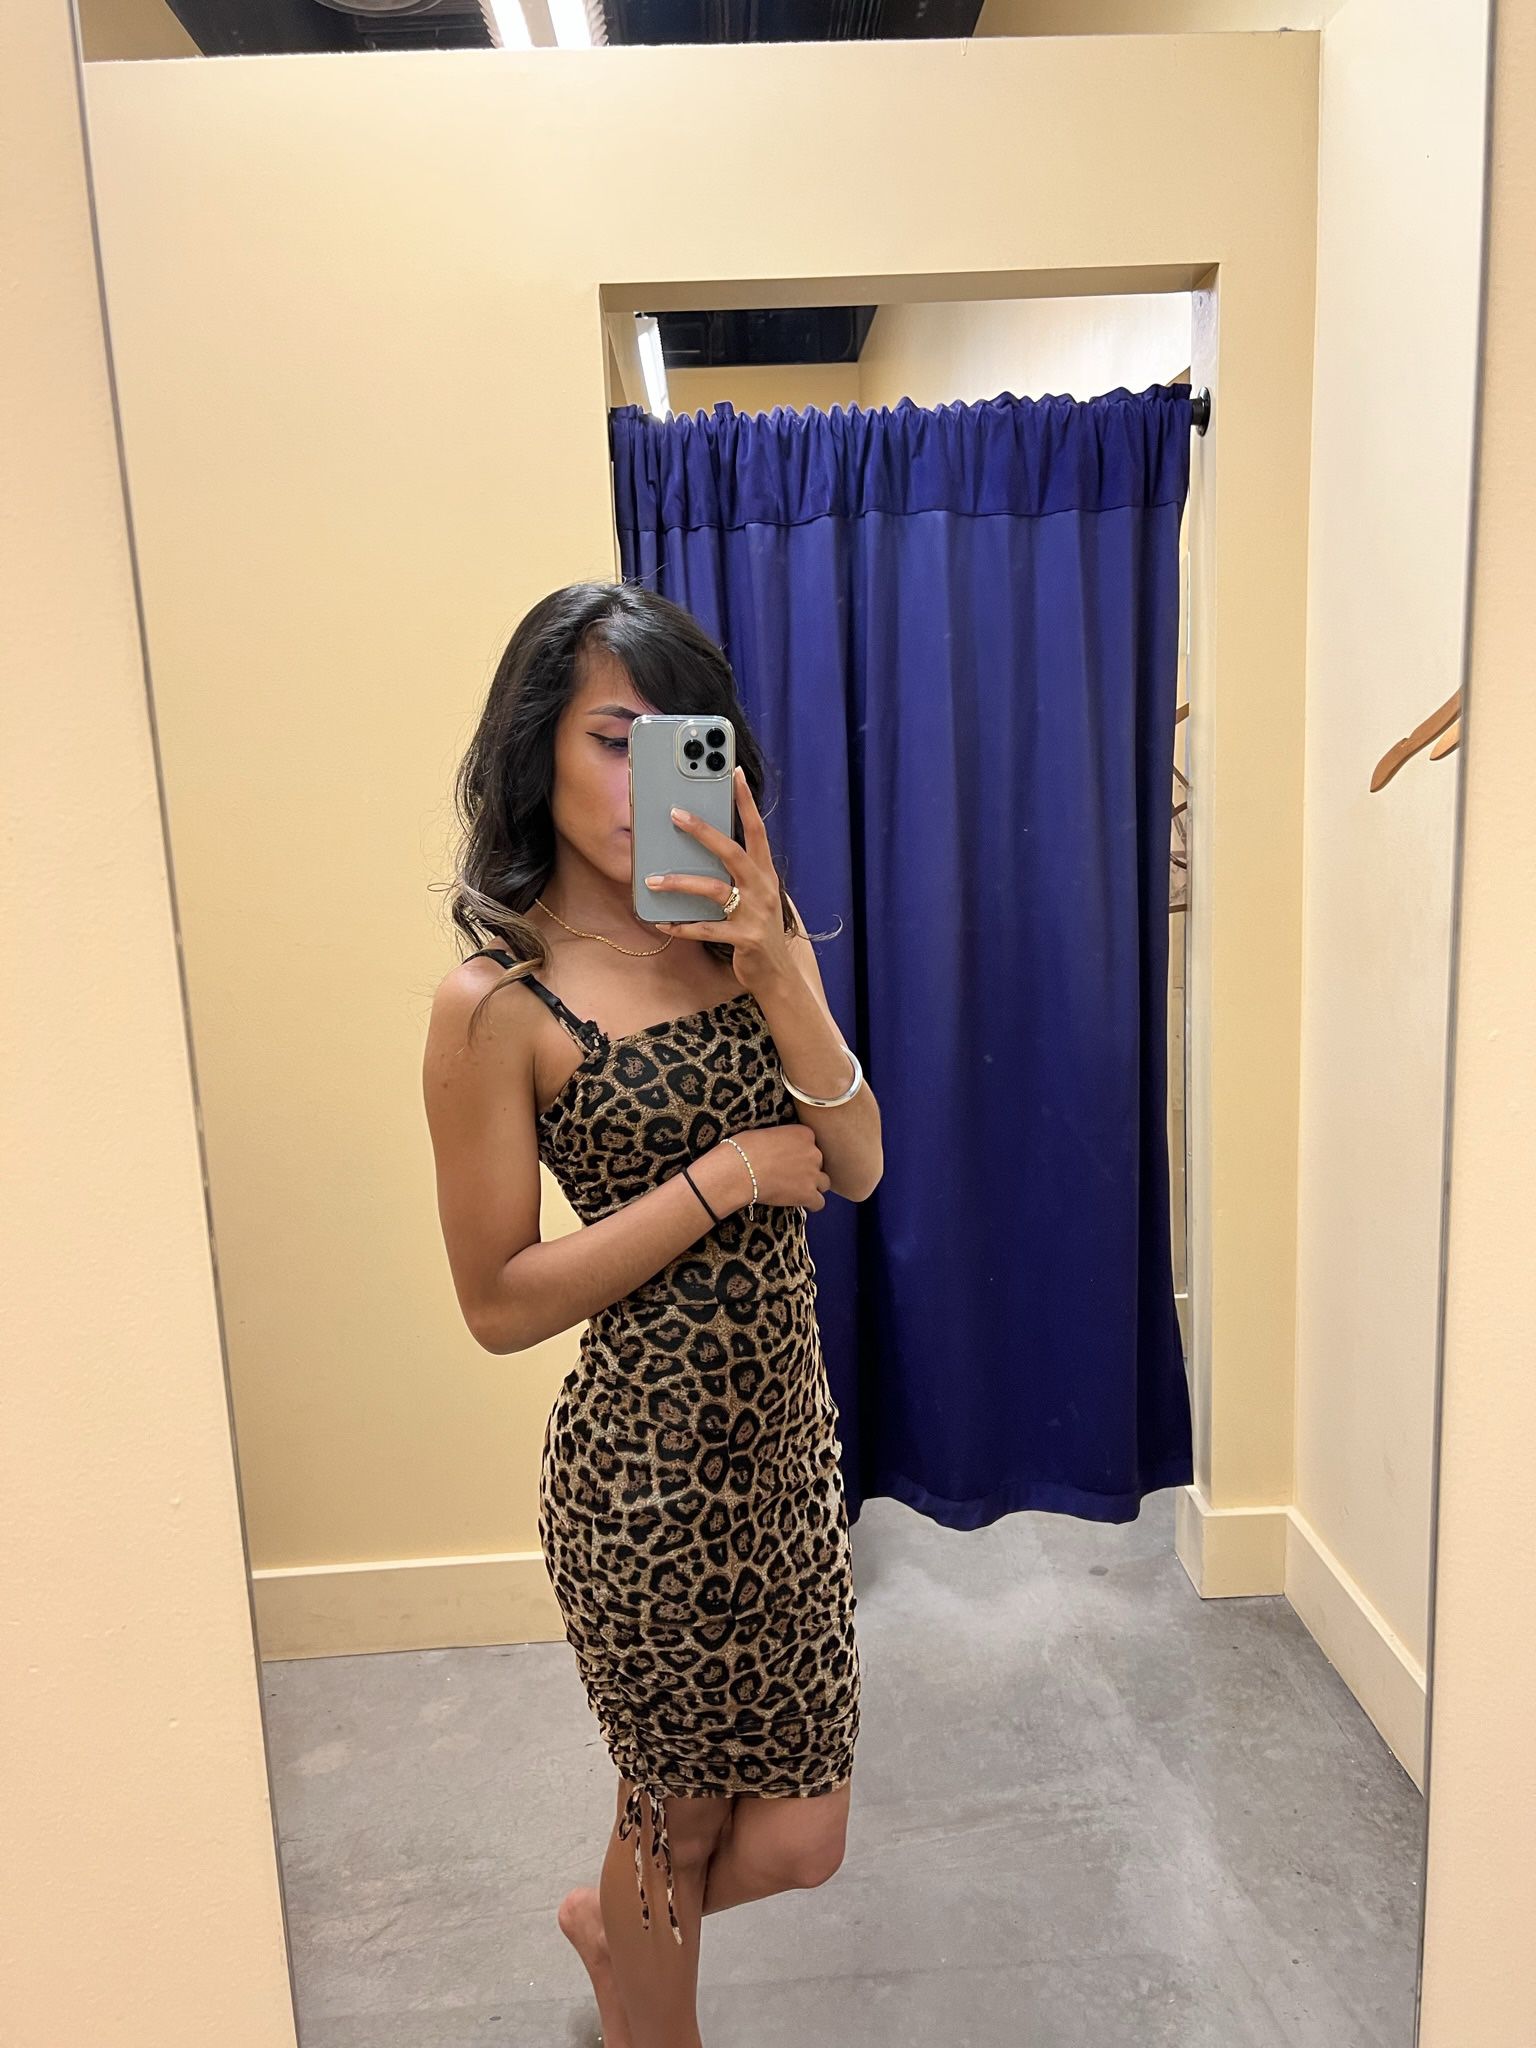 Cheetah Print dress